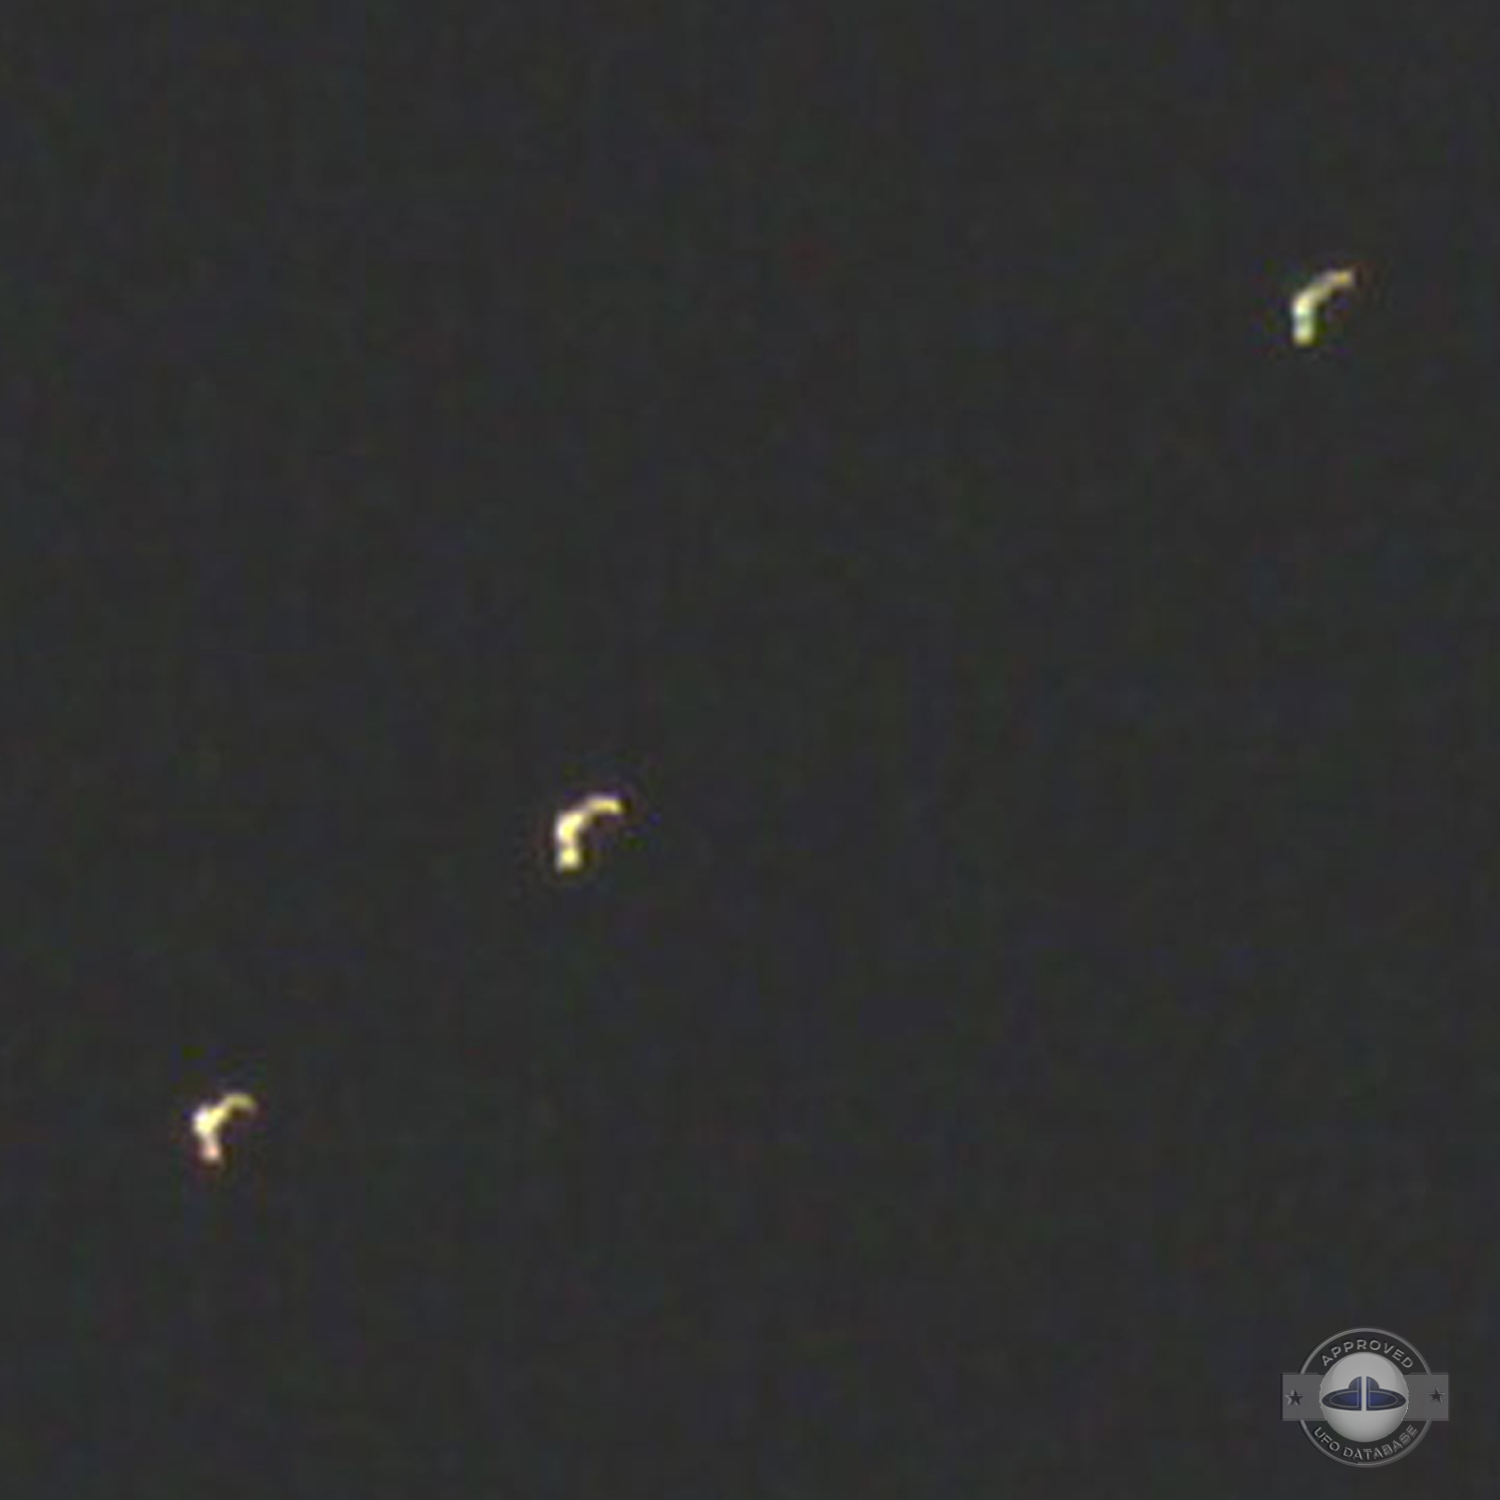 Fleet of three Boomerang UFOs passing over Granados, Mexico 2012 UFO Picture #476-3